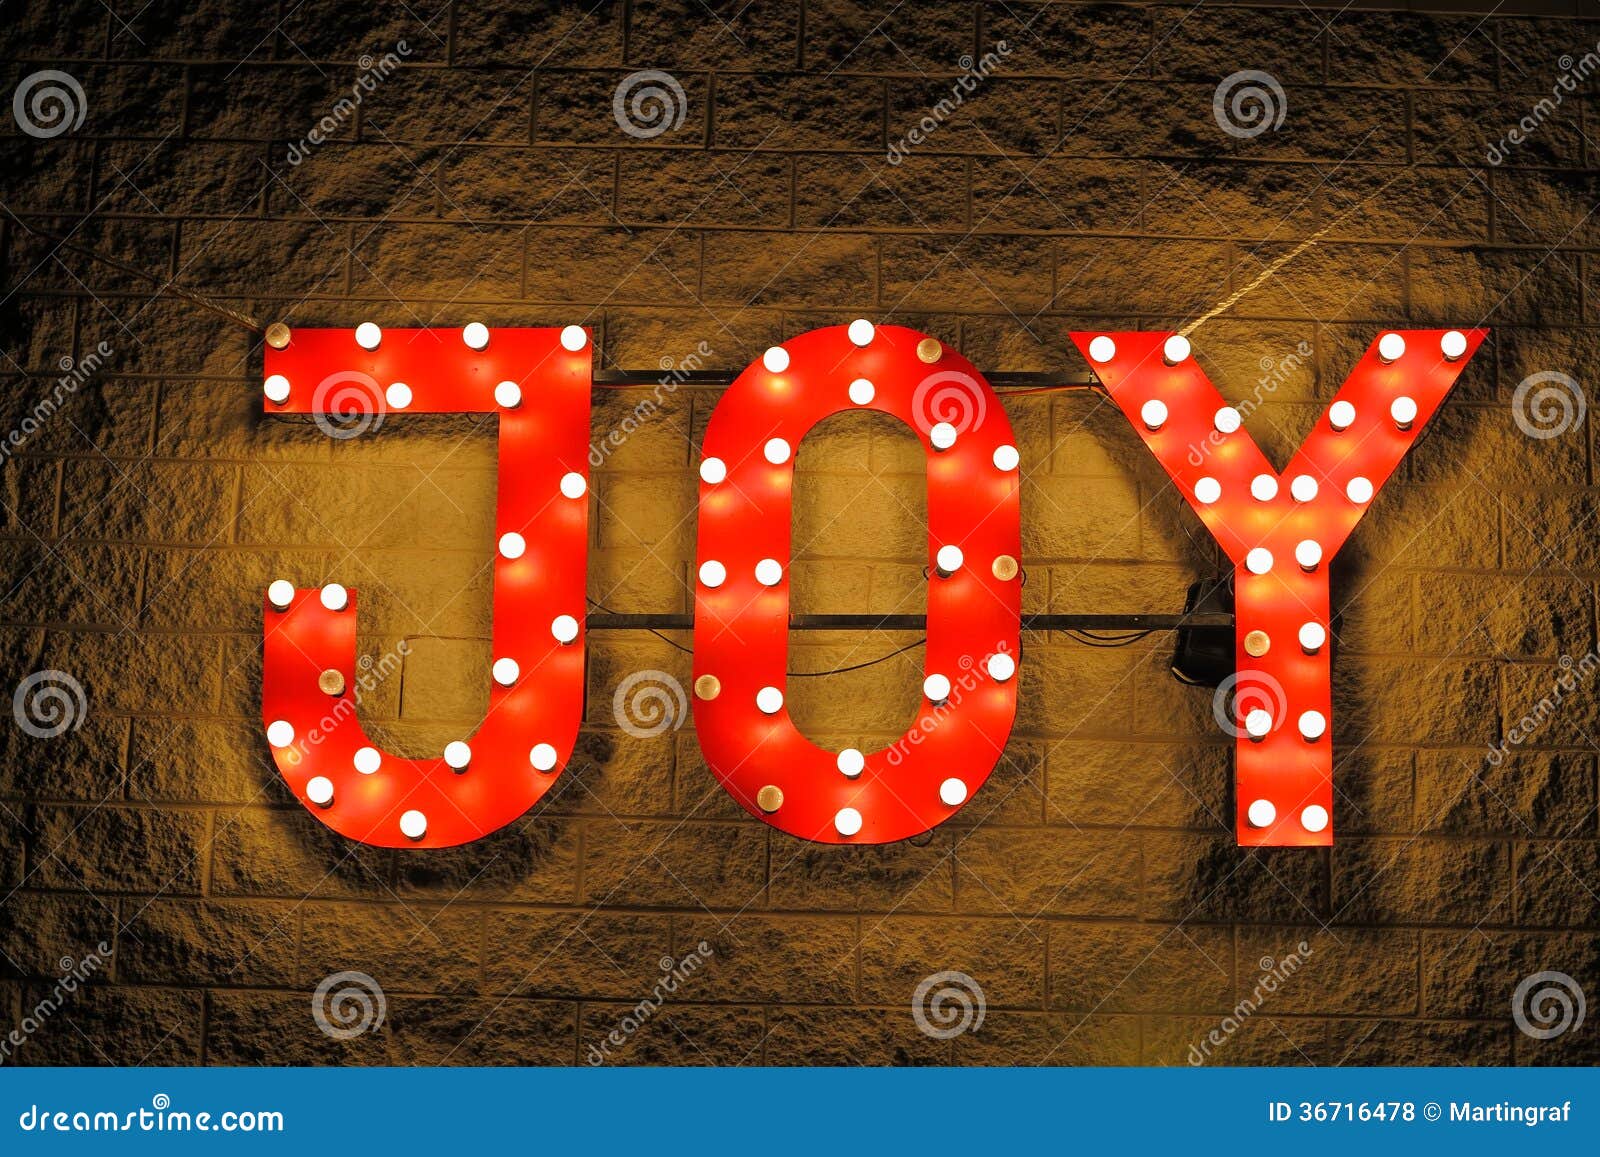 red illuminated sign joy